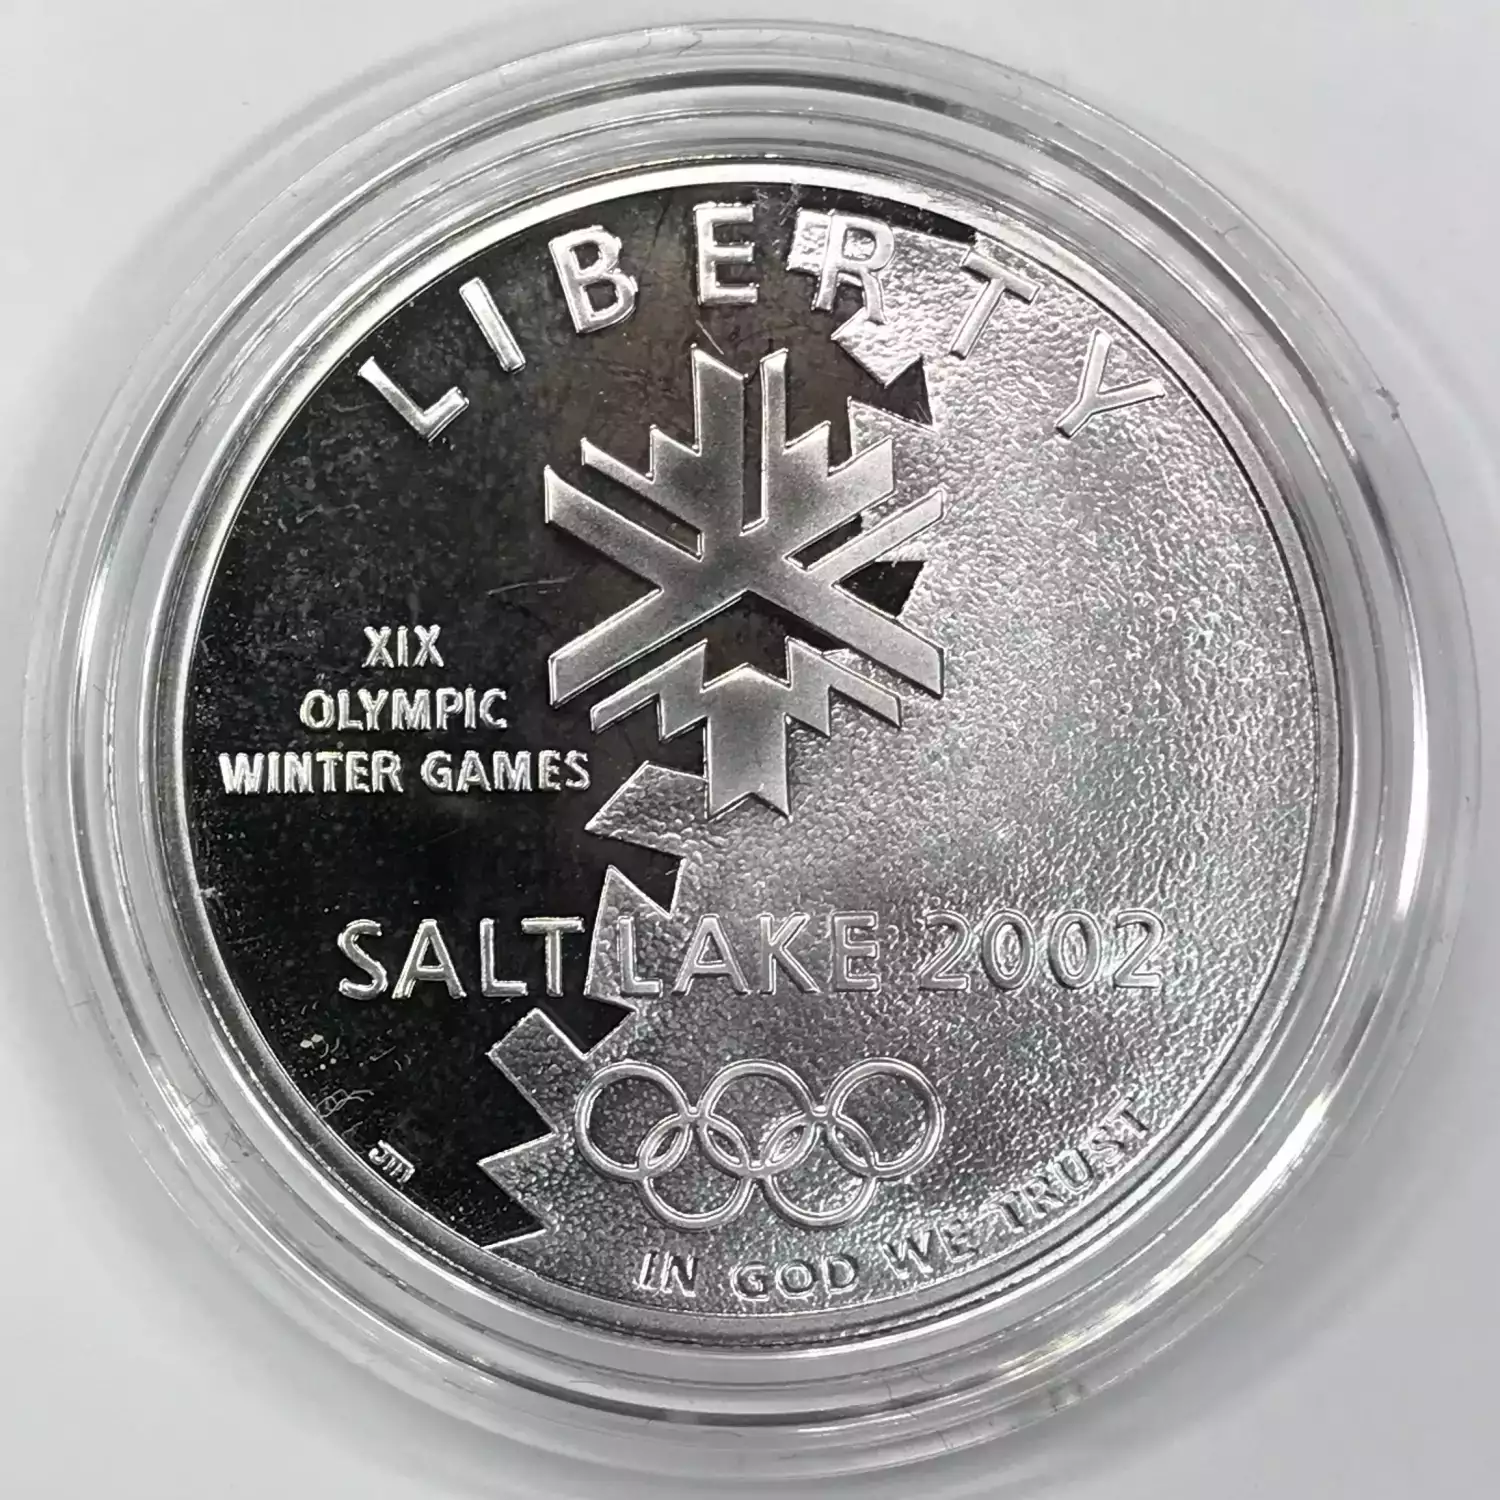 2002-P Salt Lake Olympic Winter Games Proof Silver Dollar w US Mint Box & COA (6)